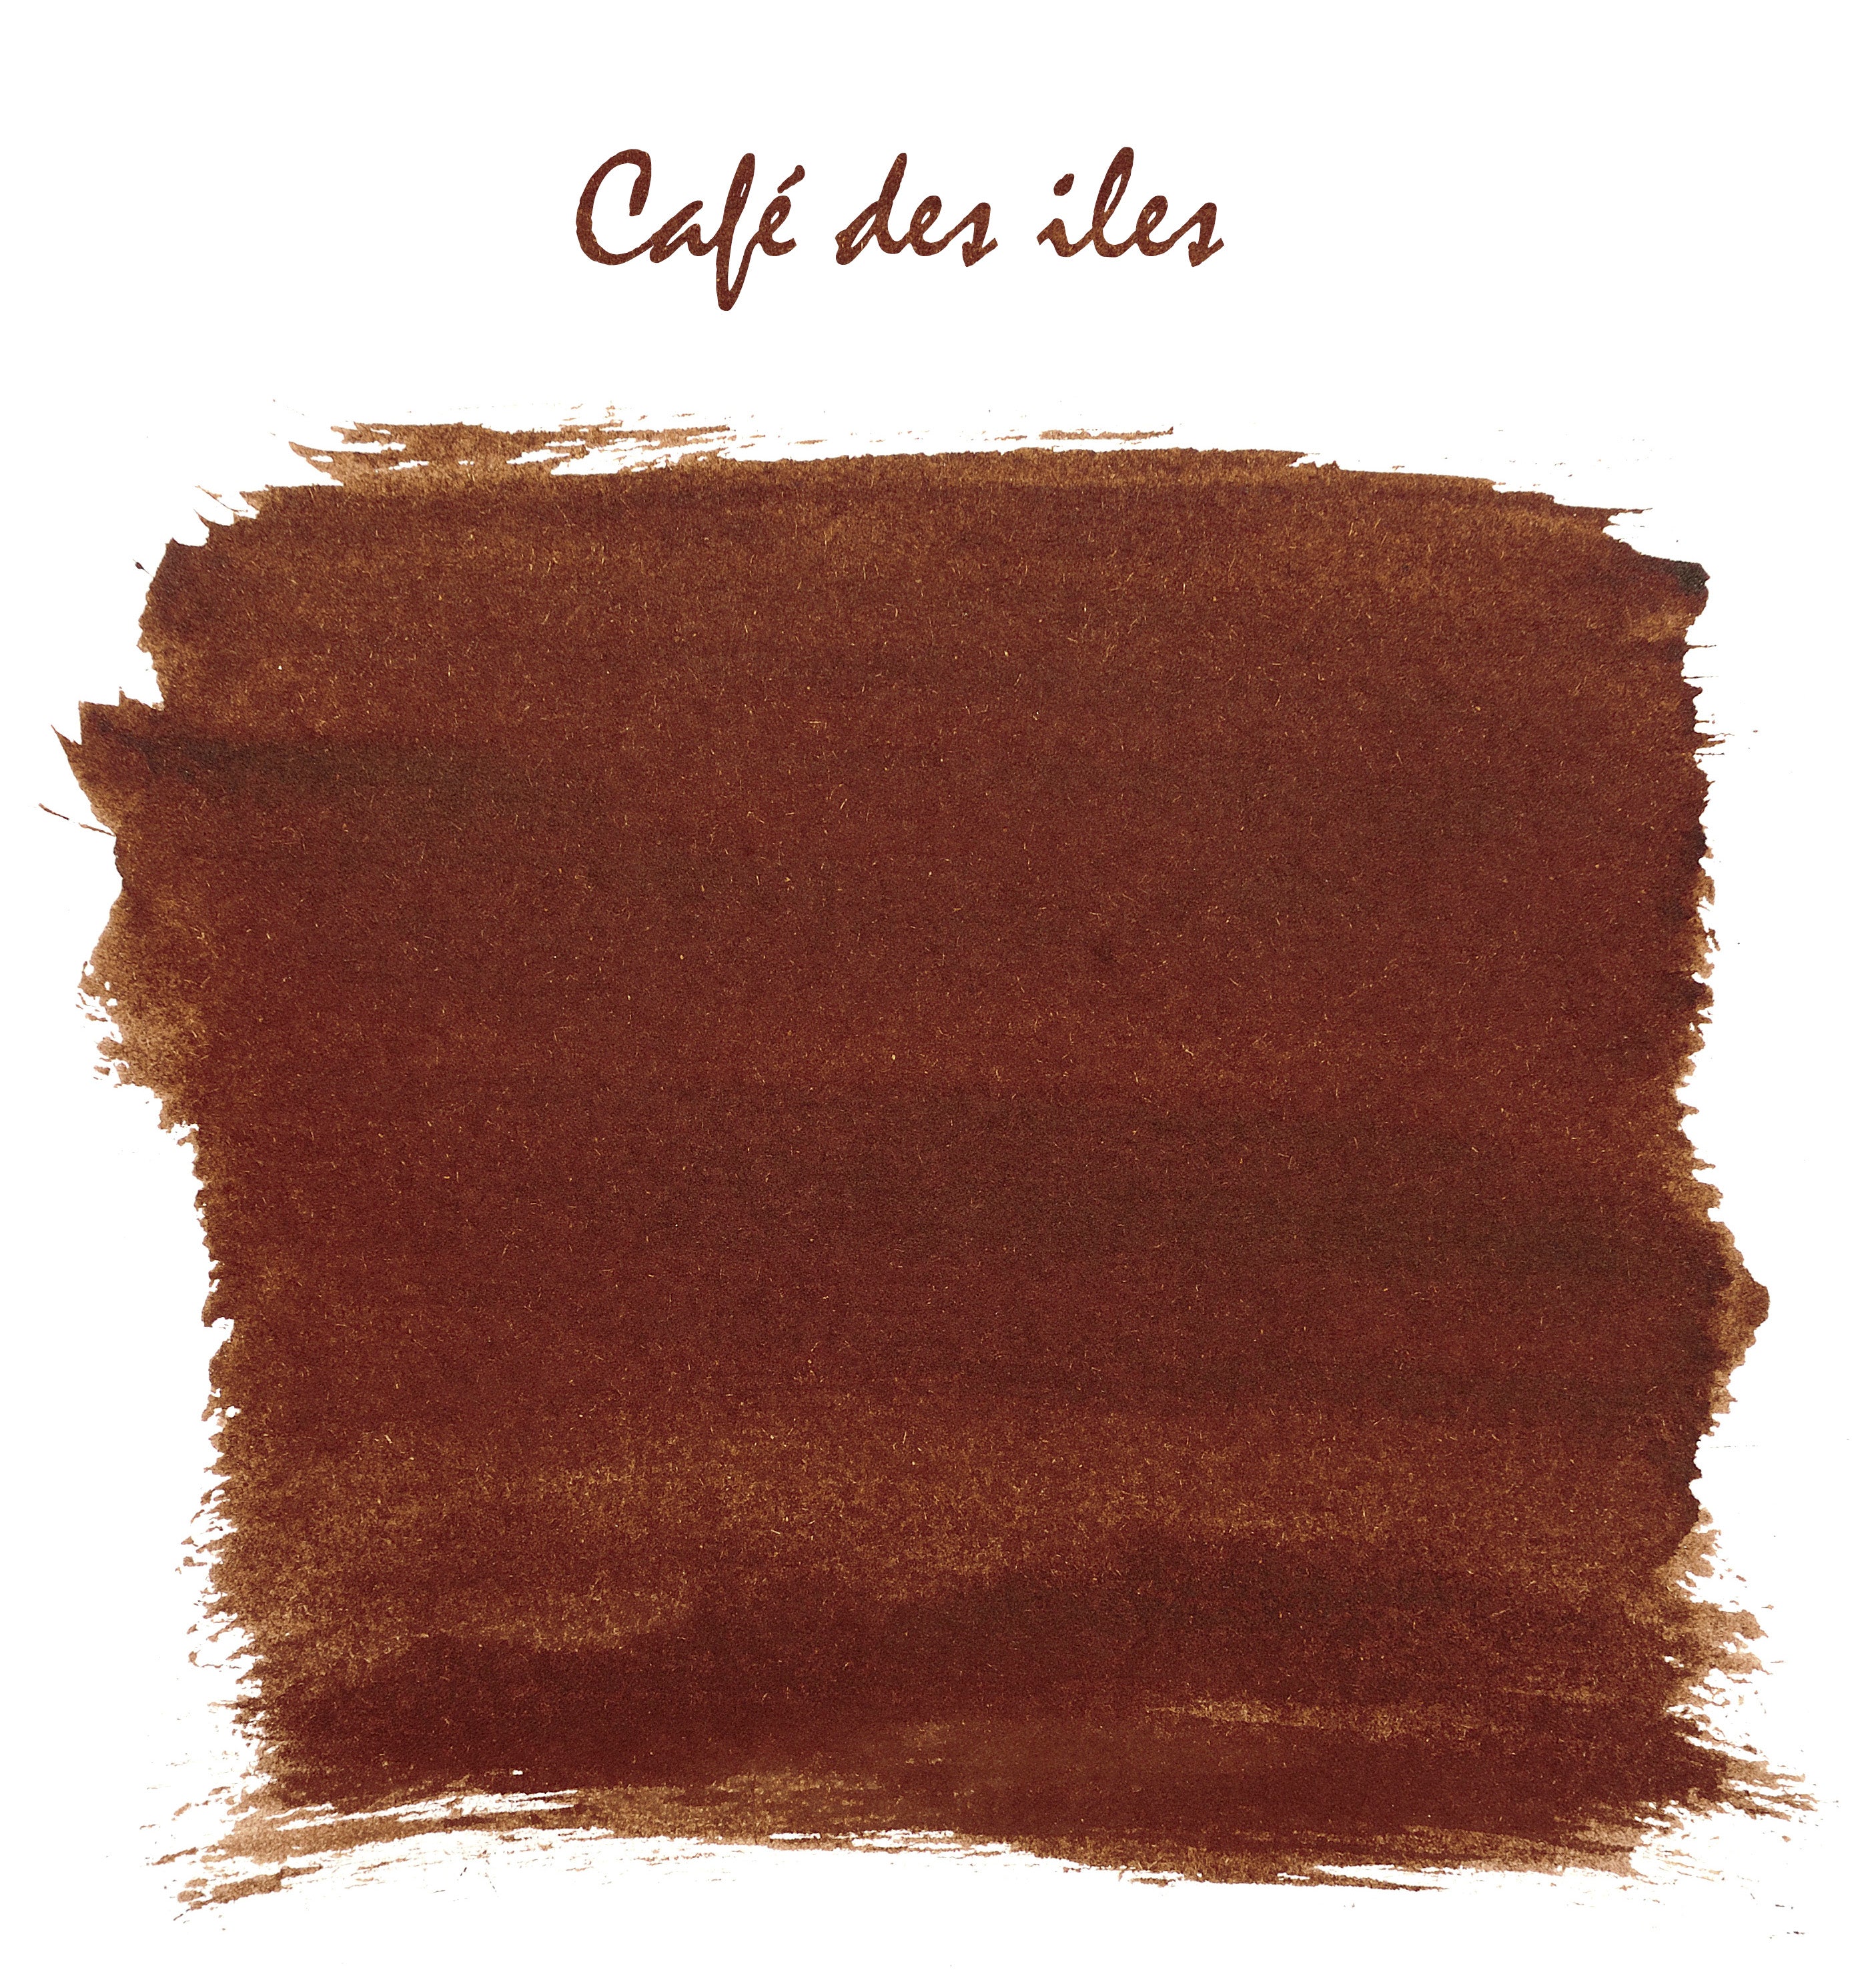 Herbin - Cafe des iles (kaffeebraun), 100 ml